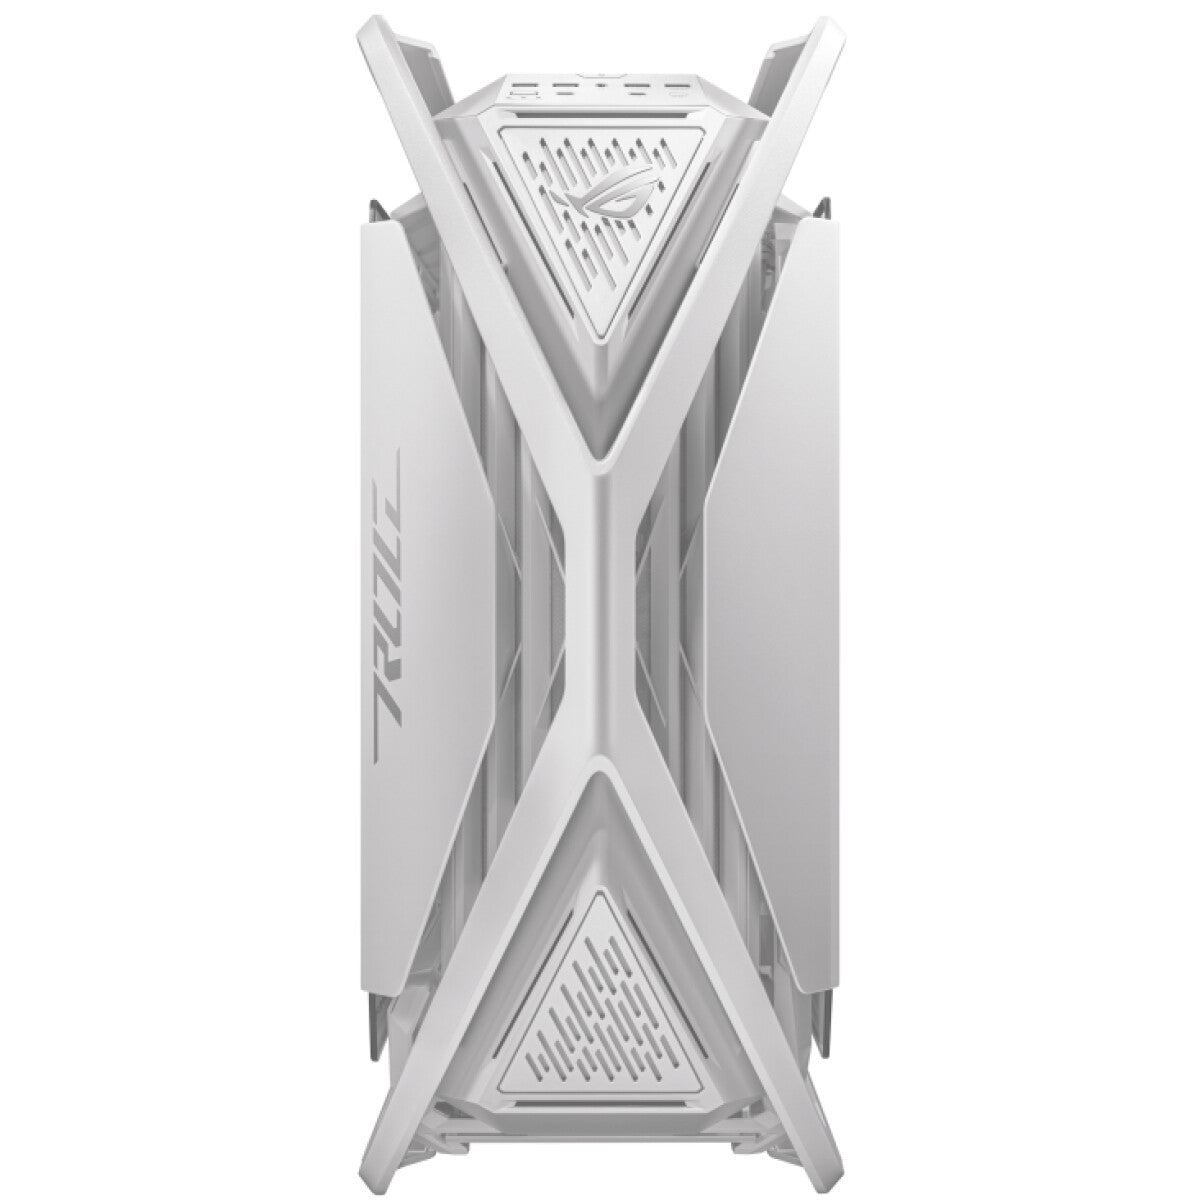 ASUS GR701 ROG Hyperion - ATX Full Tower Case in White